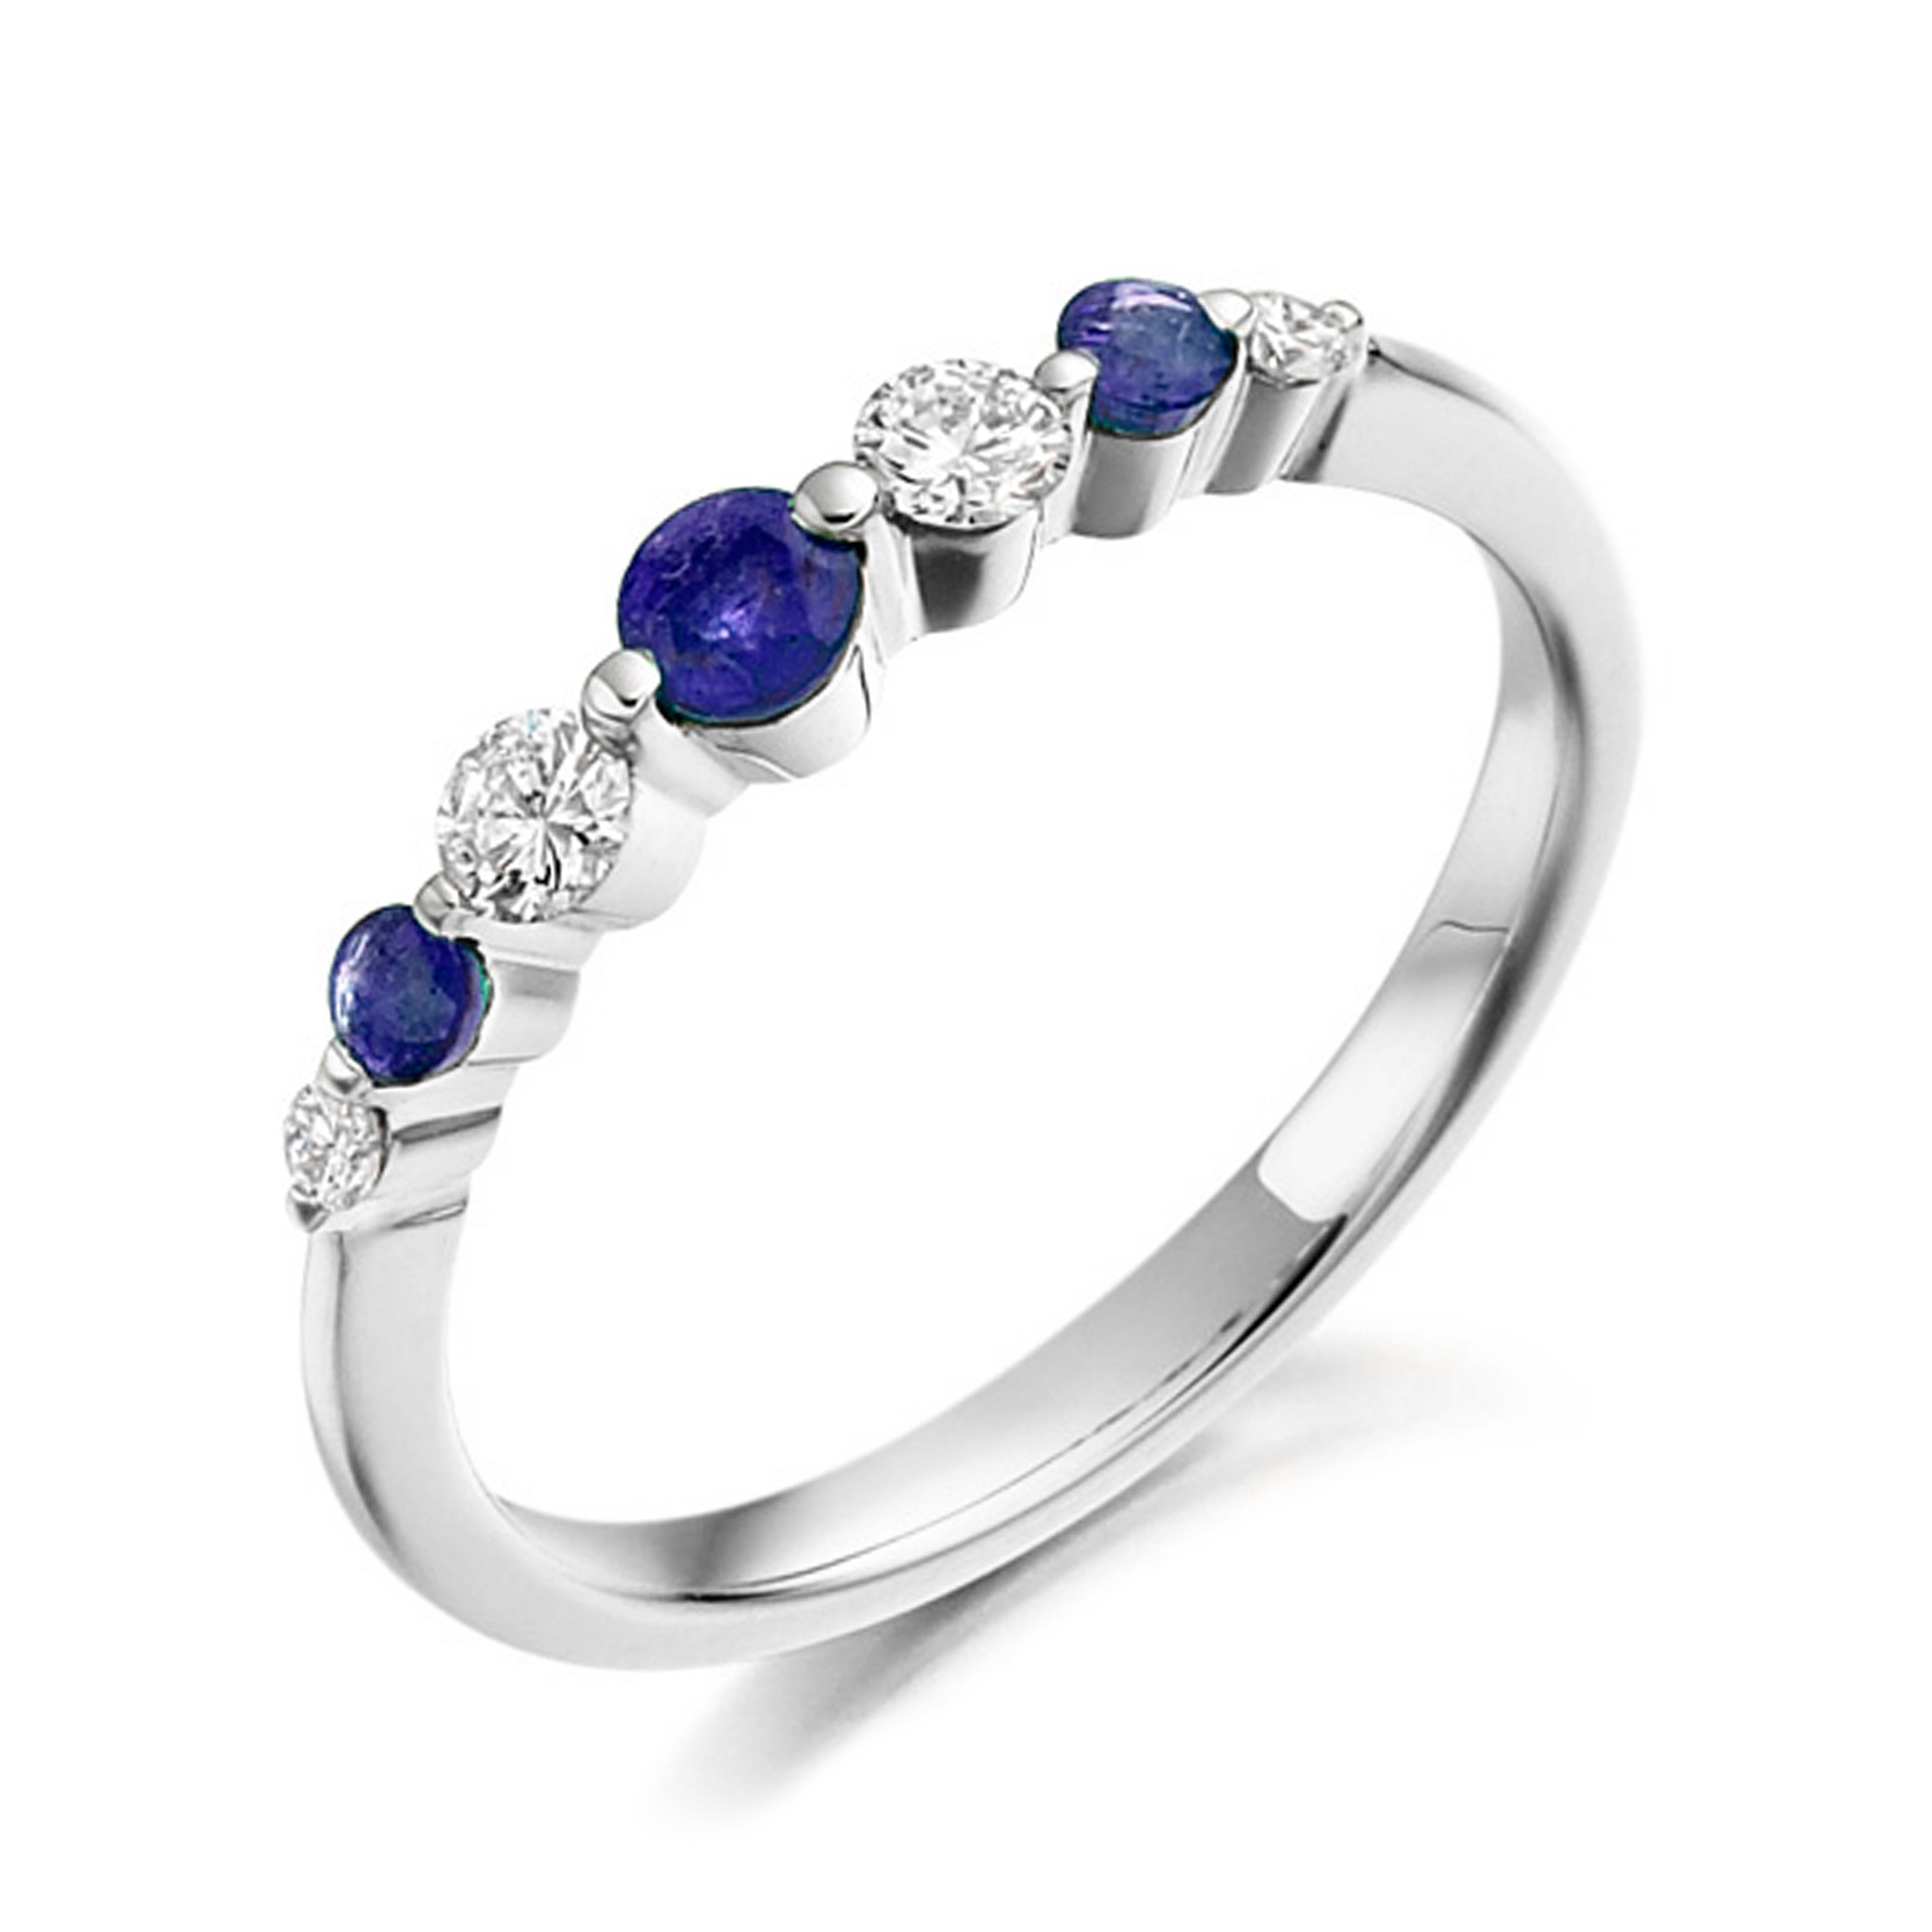 4mm,3mm Round Blue Sapphire Graduating Five Stone Diamond And Gemstone Engagement Ring